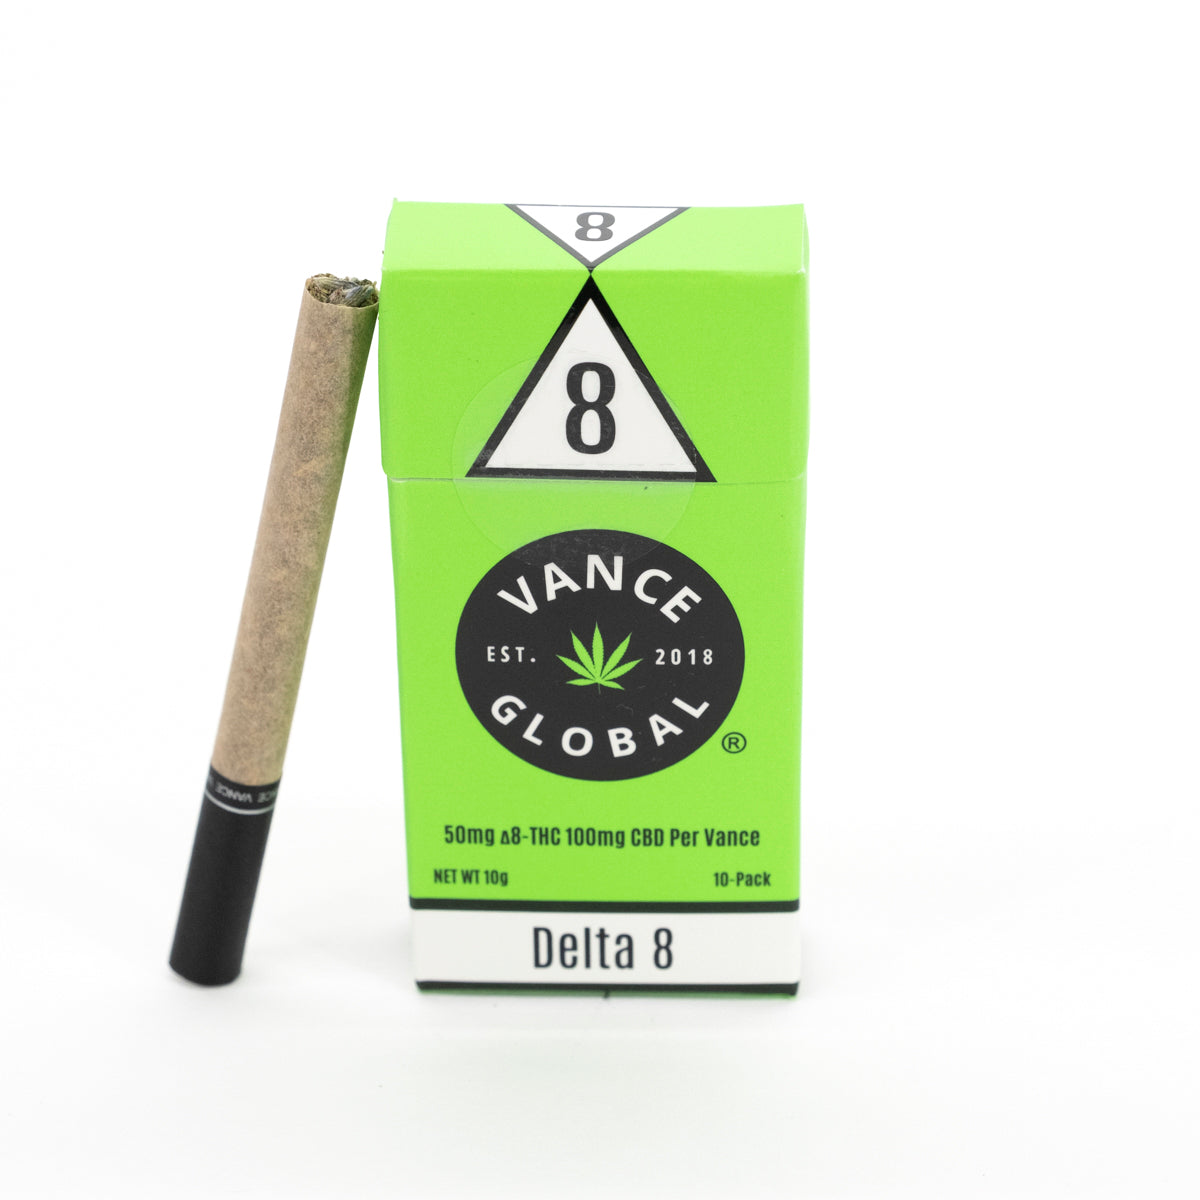 Vance Global Delta 8 Cigarettes